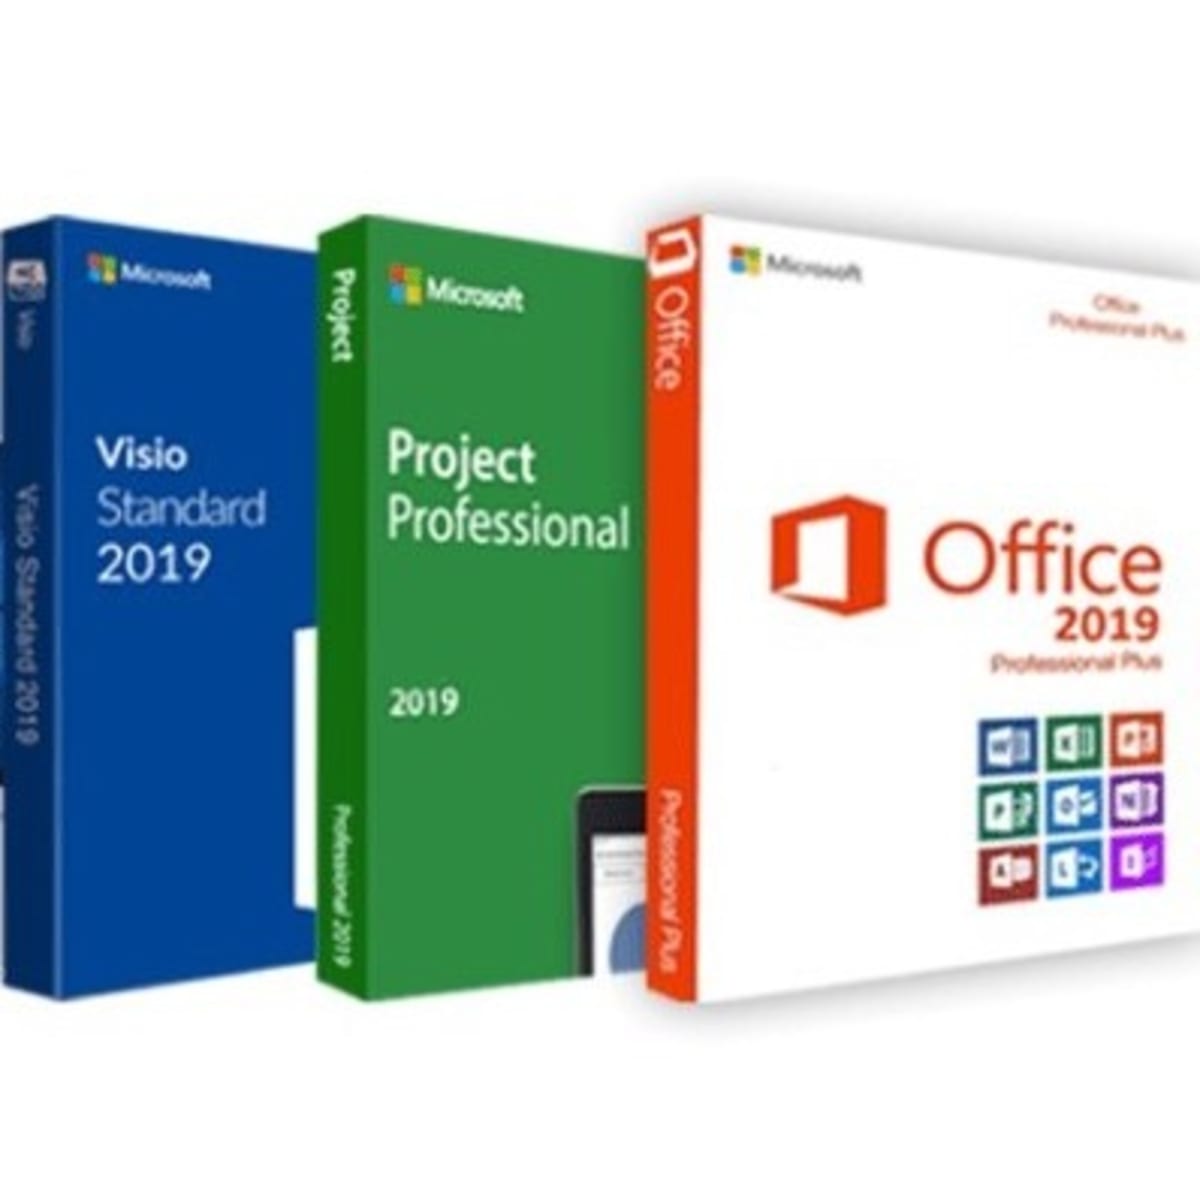 Microsoft Visio Studio Professional 2019 - Loja Silvermoz